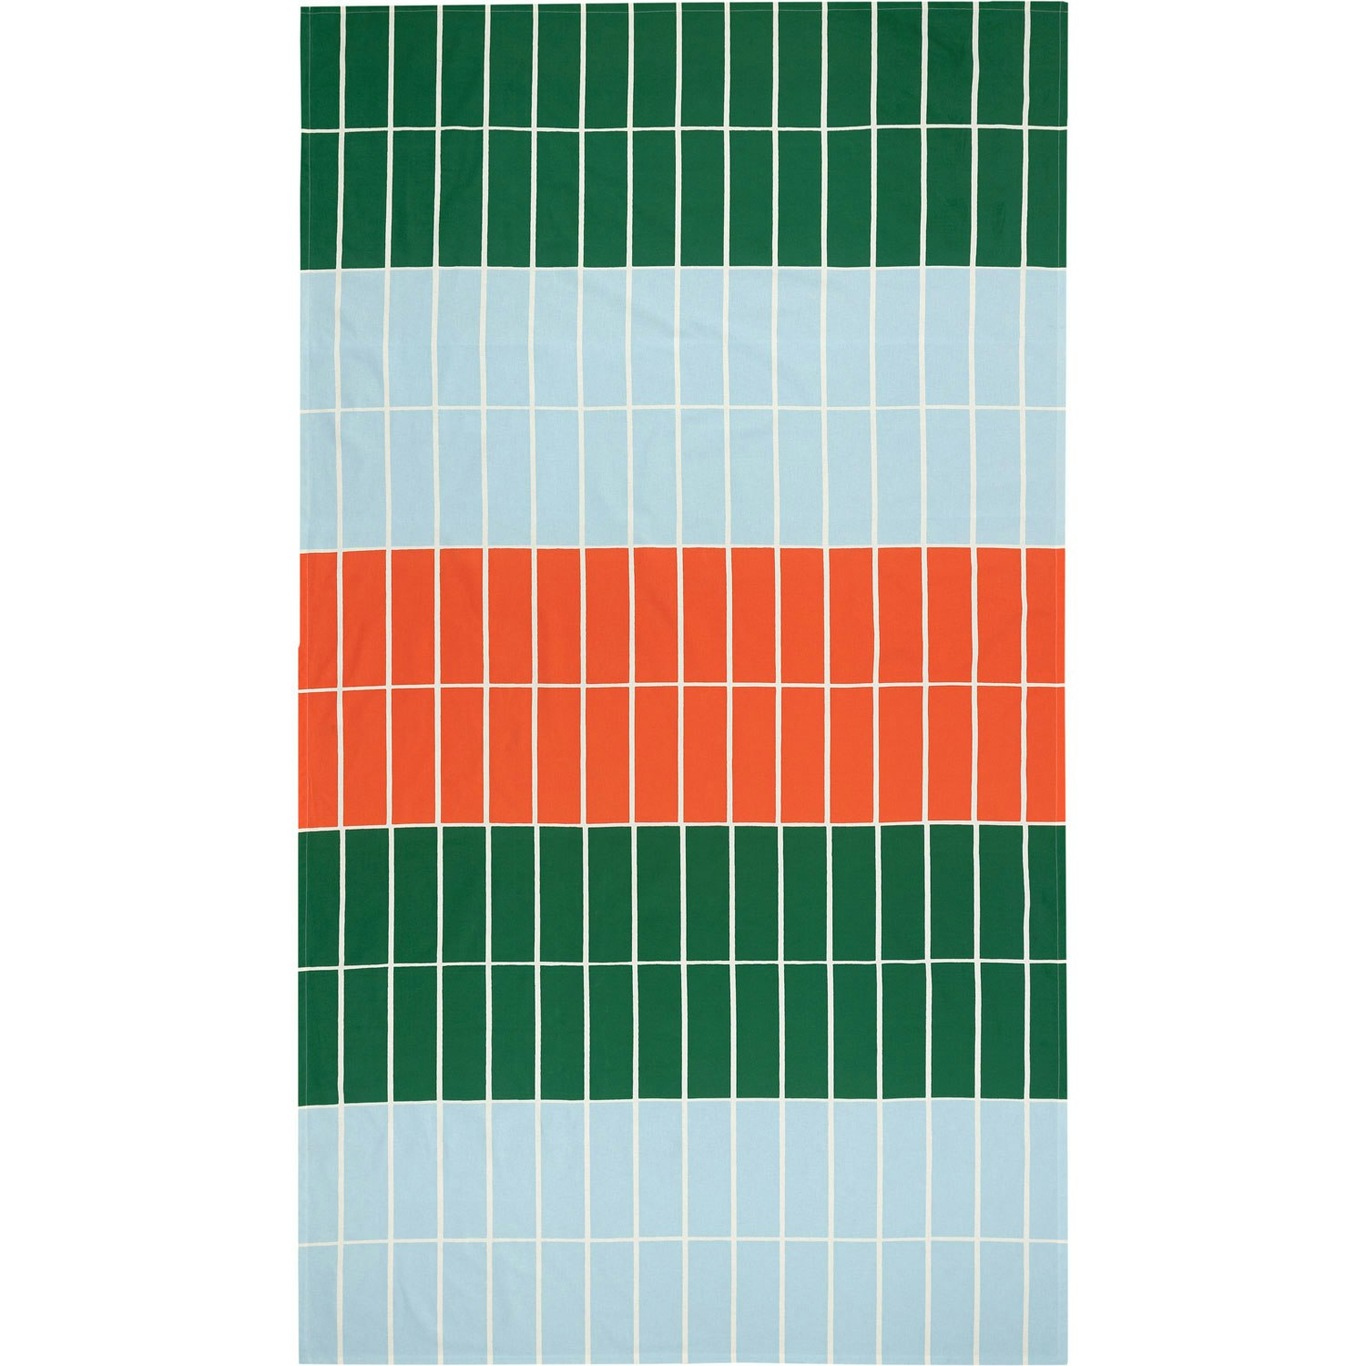 Tiiliskivi Tafelkleed 135x245 cm, Oranje / Lichtblauw / Groen